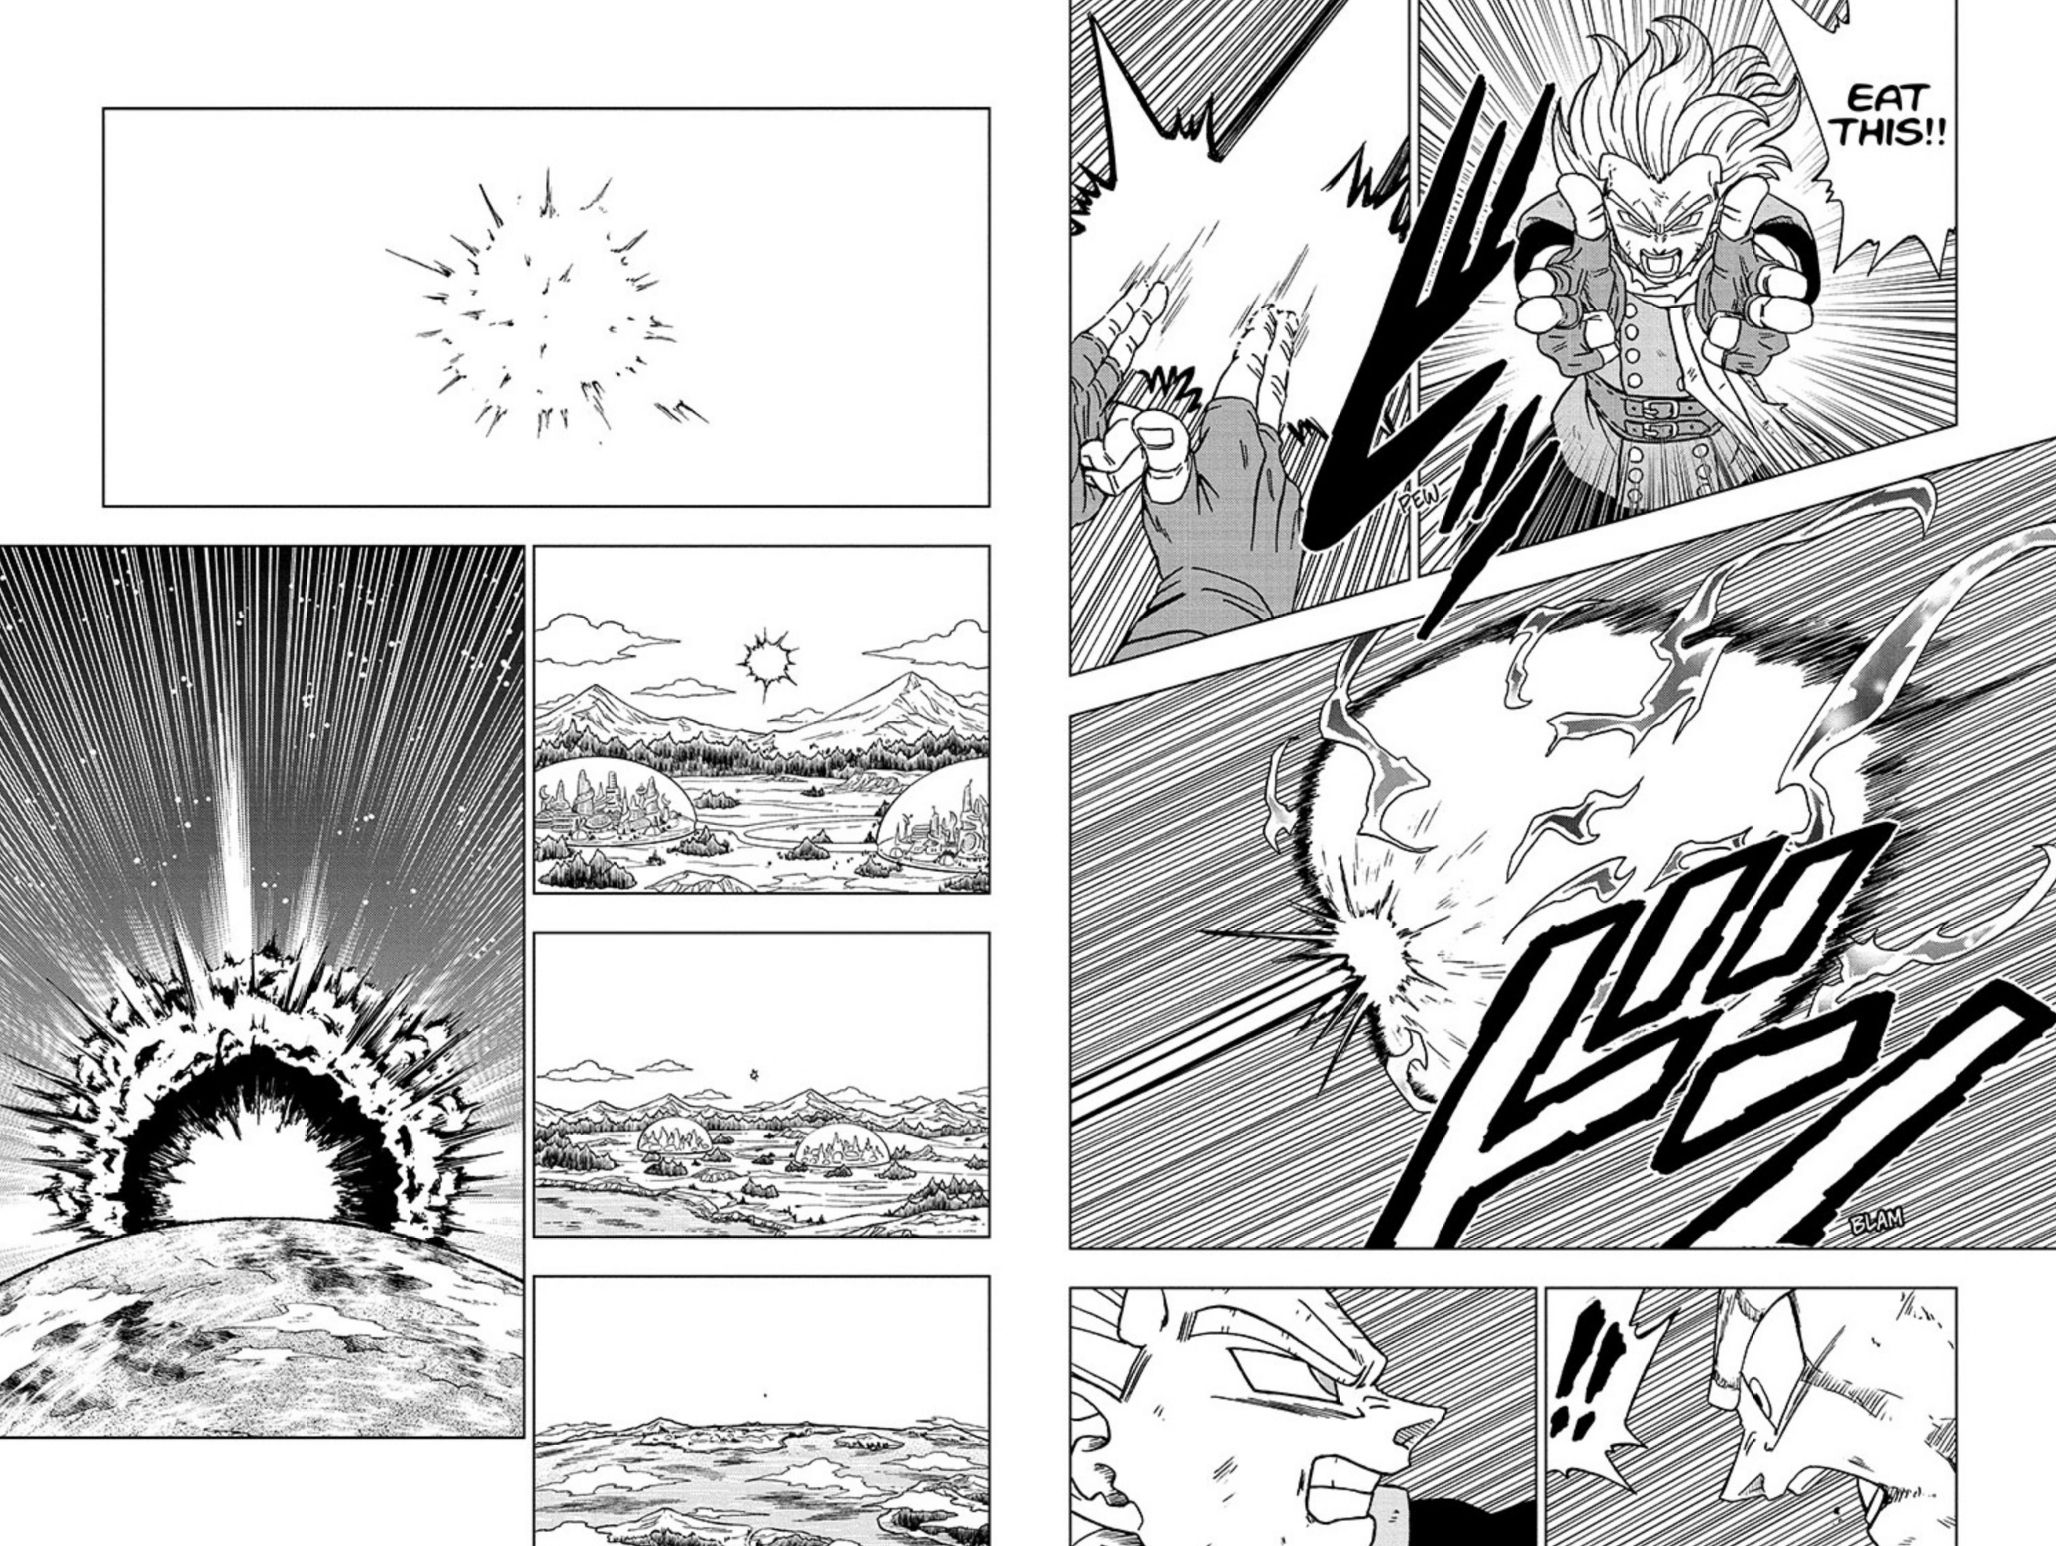 Vegeta and Granolah fight in Dragon Ball Super Chapter 75, by Akira Toriyama and Toyotarou.